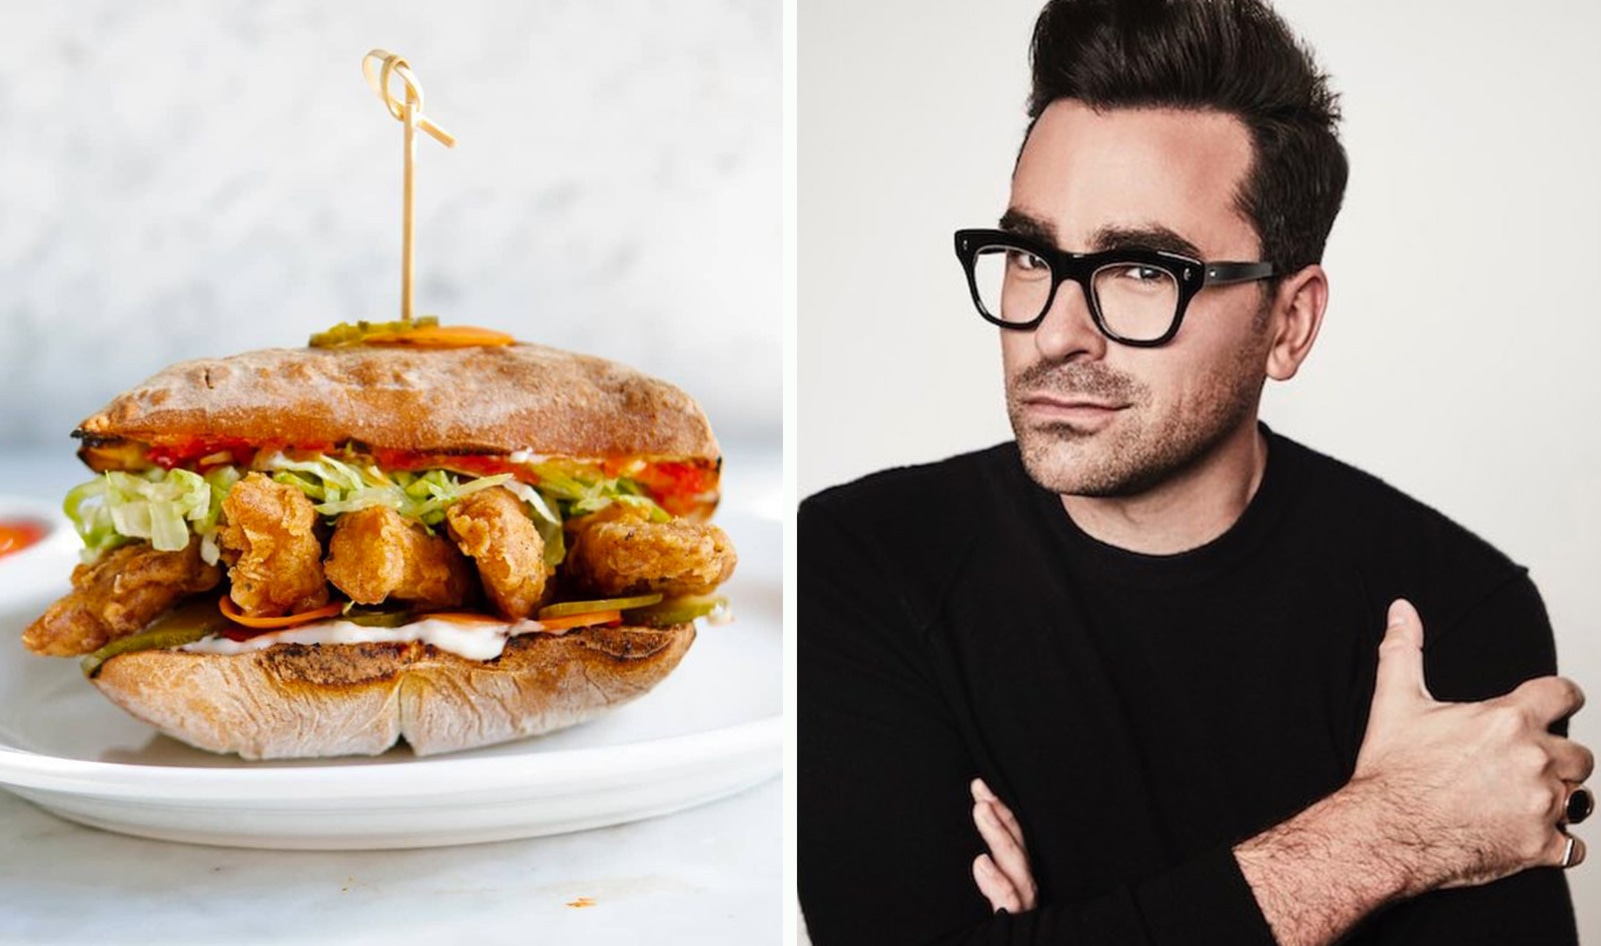 Schitt's Creek Star Dan Levy Praises 'The Best' Vegan Chicken Sandwich&nbsp;